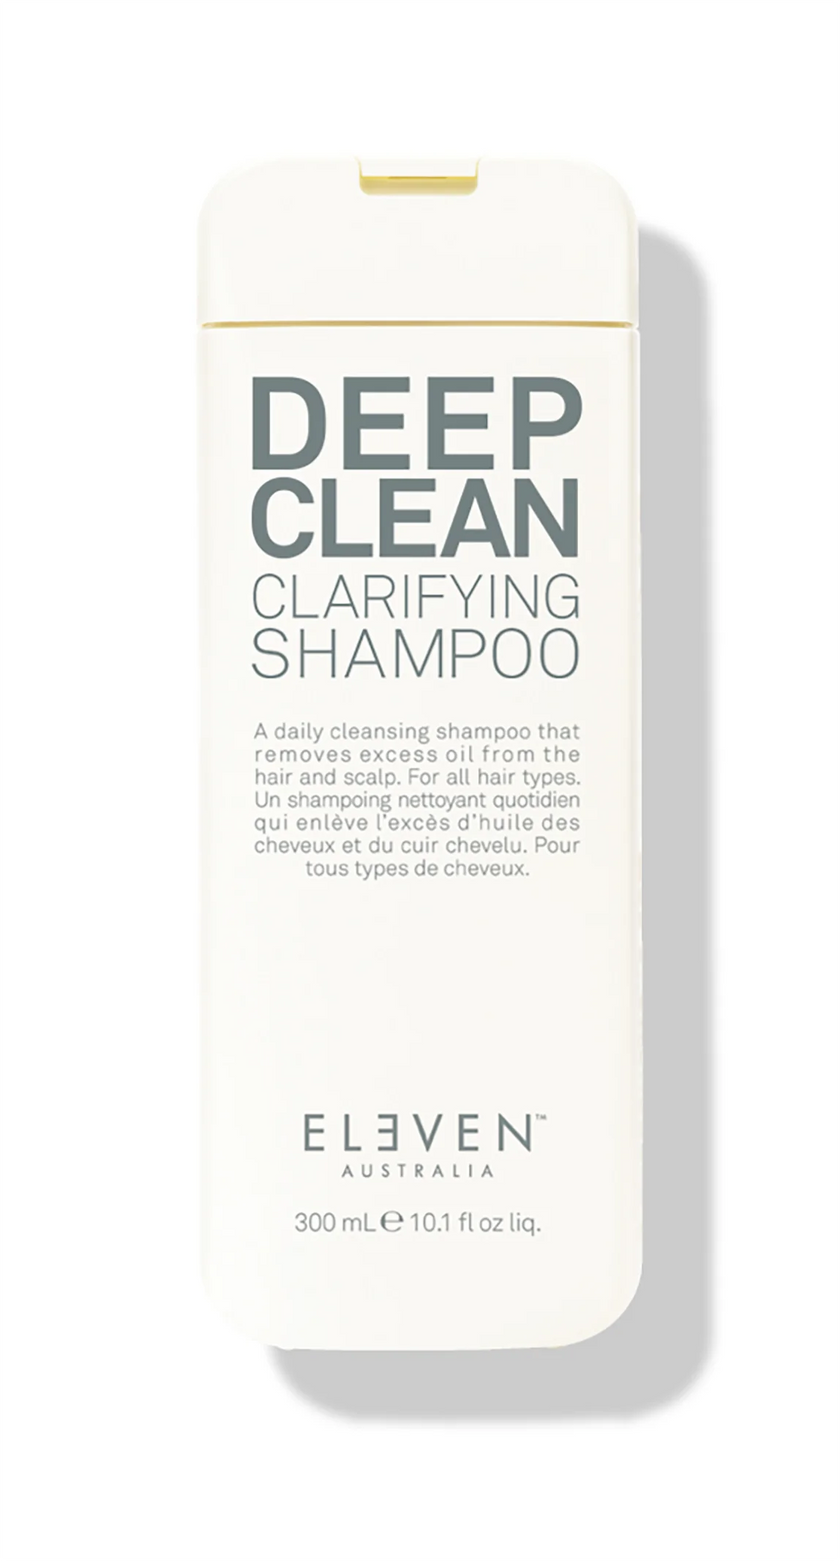 Deep Clean Clarifying Shampoo Image